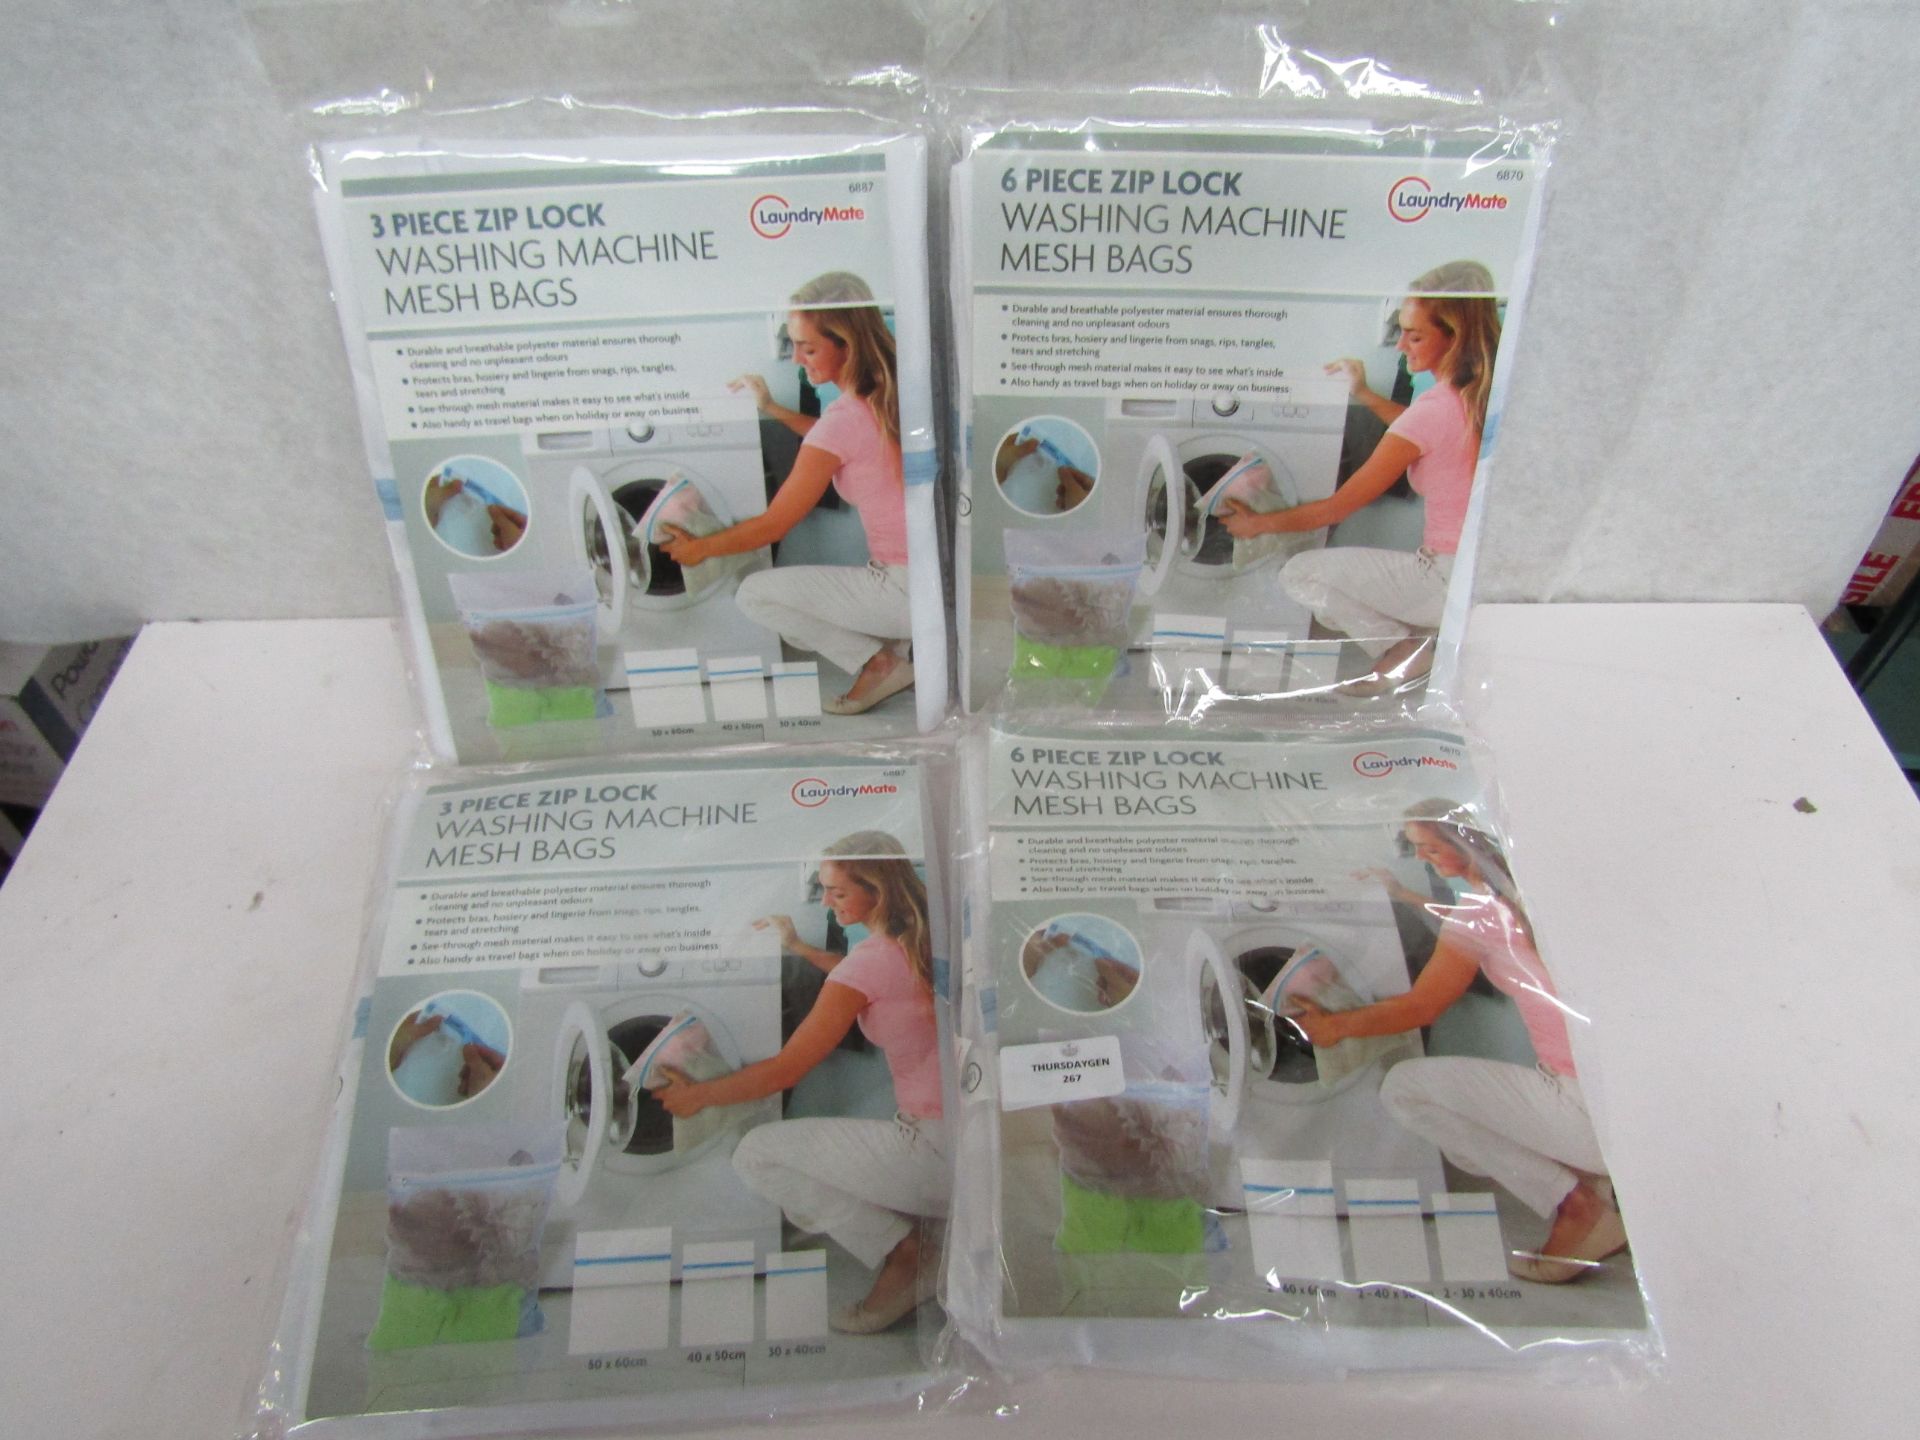 2x LaundryMate - 6-Piece Ziplock Washing Machine Mesh Bags - Packaged4